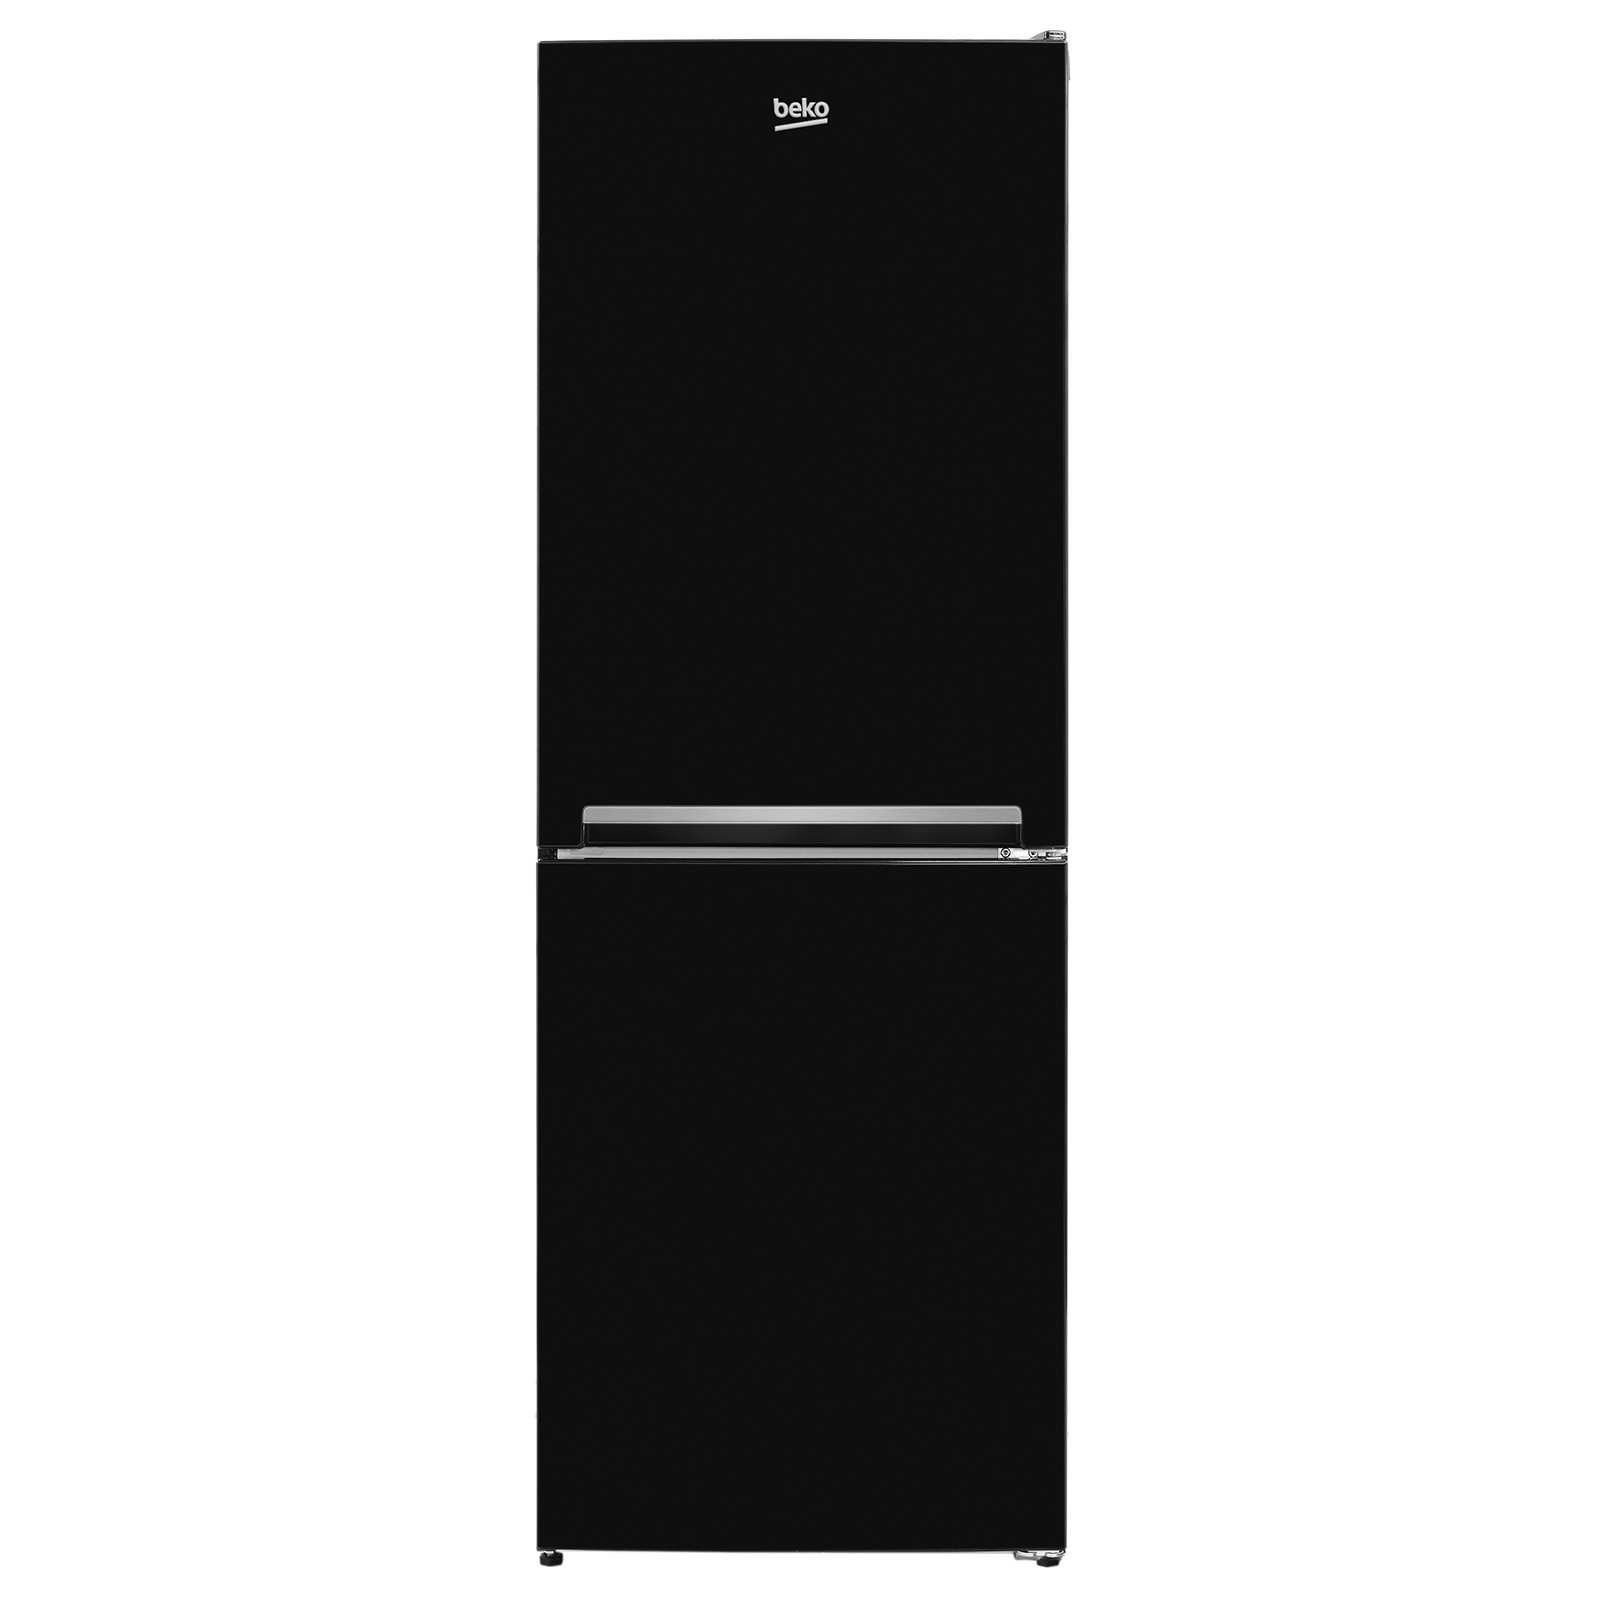 Image of Beko CFG3552B 55cm Frost Free Fridge Freezer in Black 1 53m F Rated